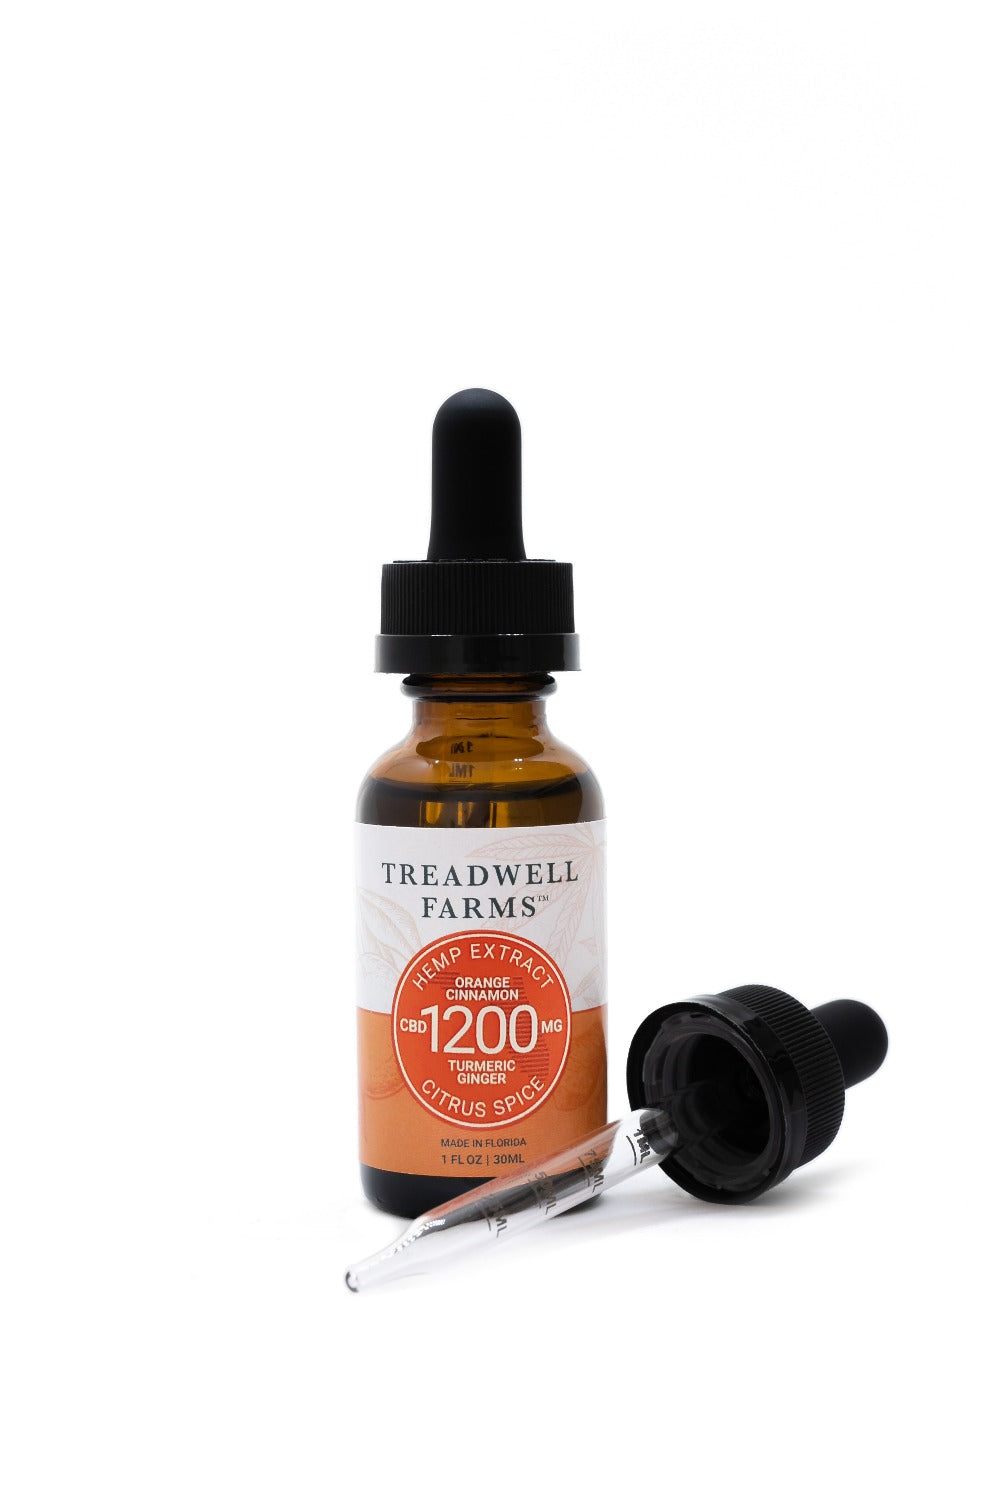 Treadwell Farms 1200 mg high potency Citrus Spice CBD hemp oil tincture bottle and dosage measurement dropper